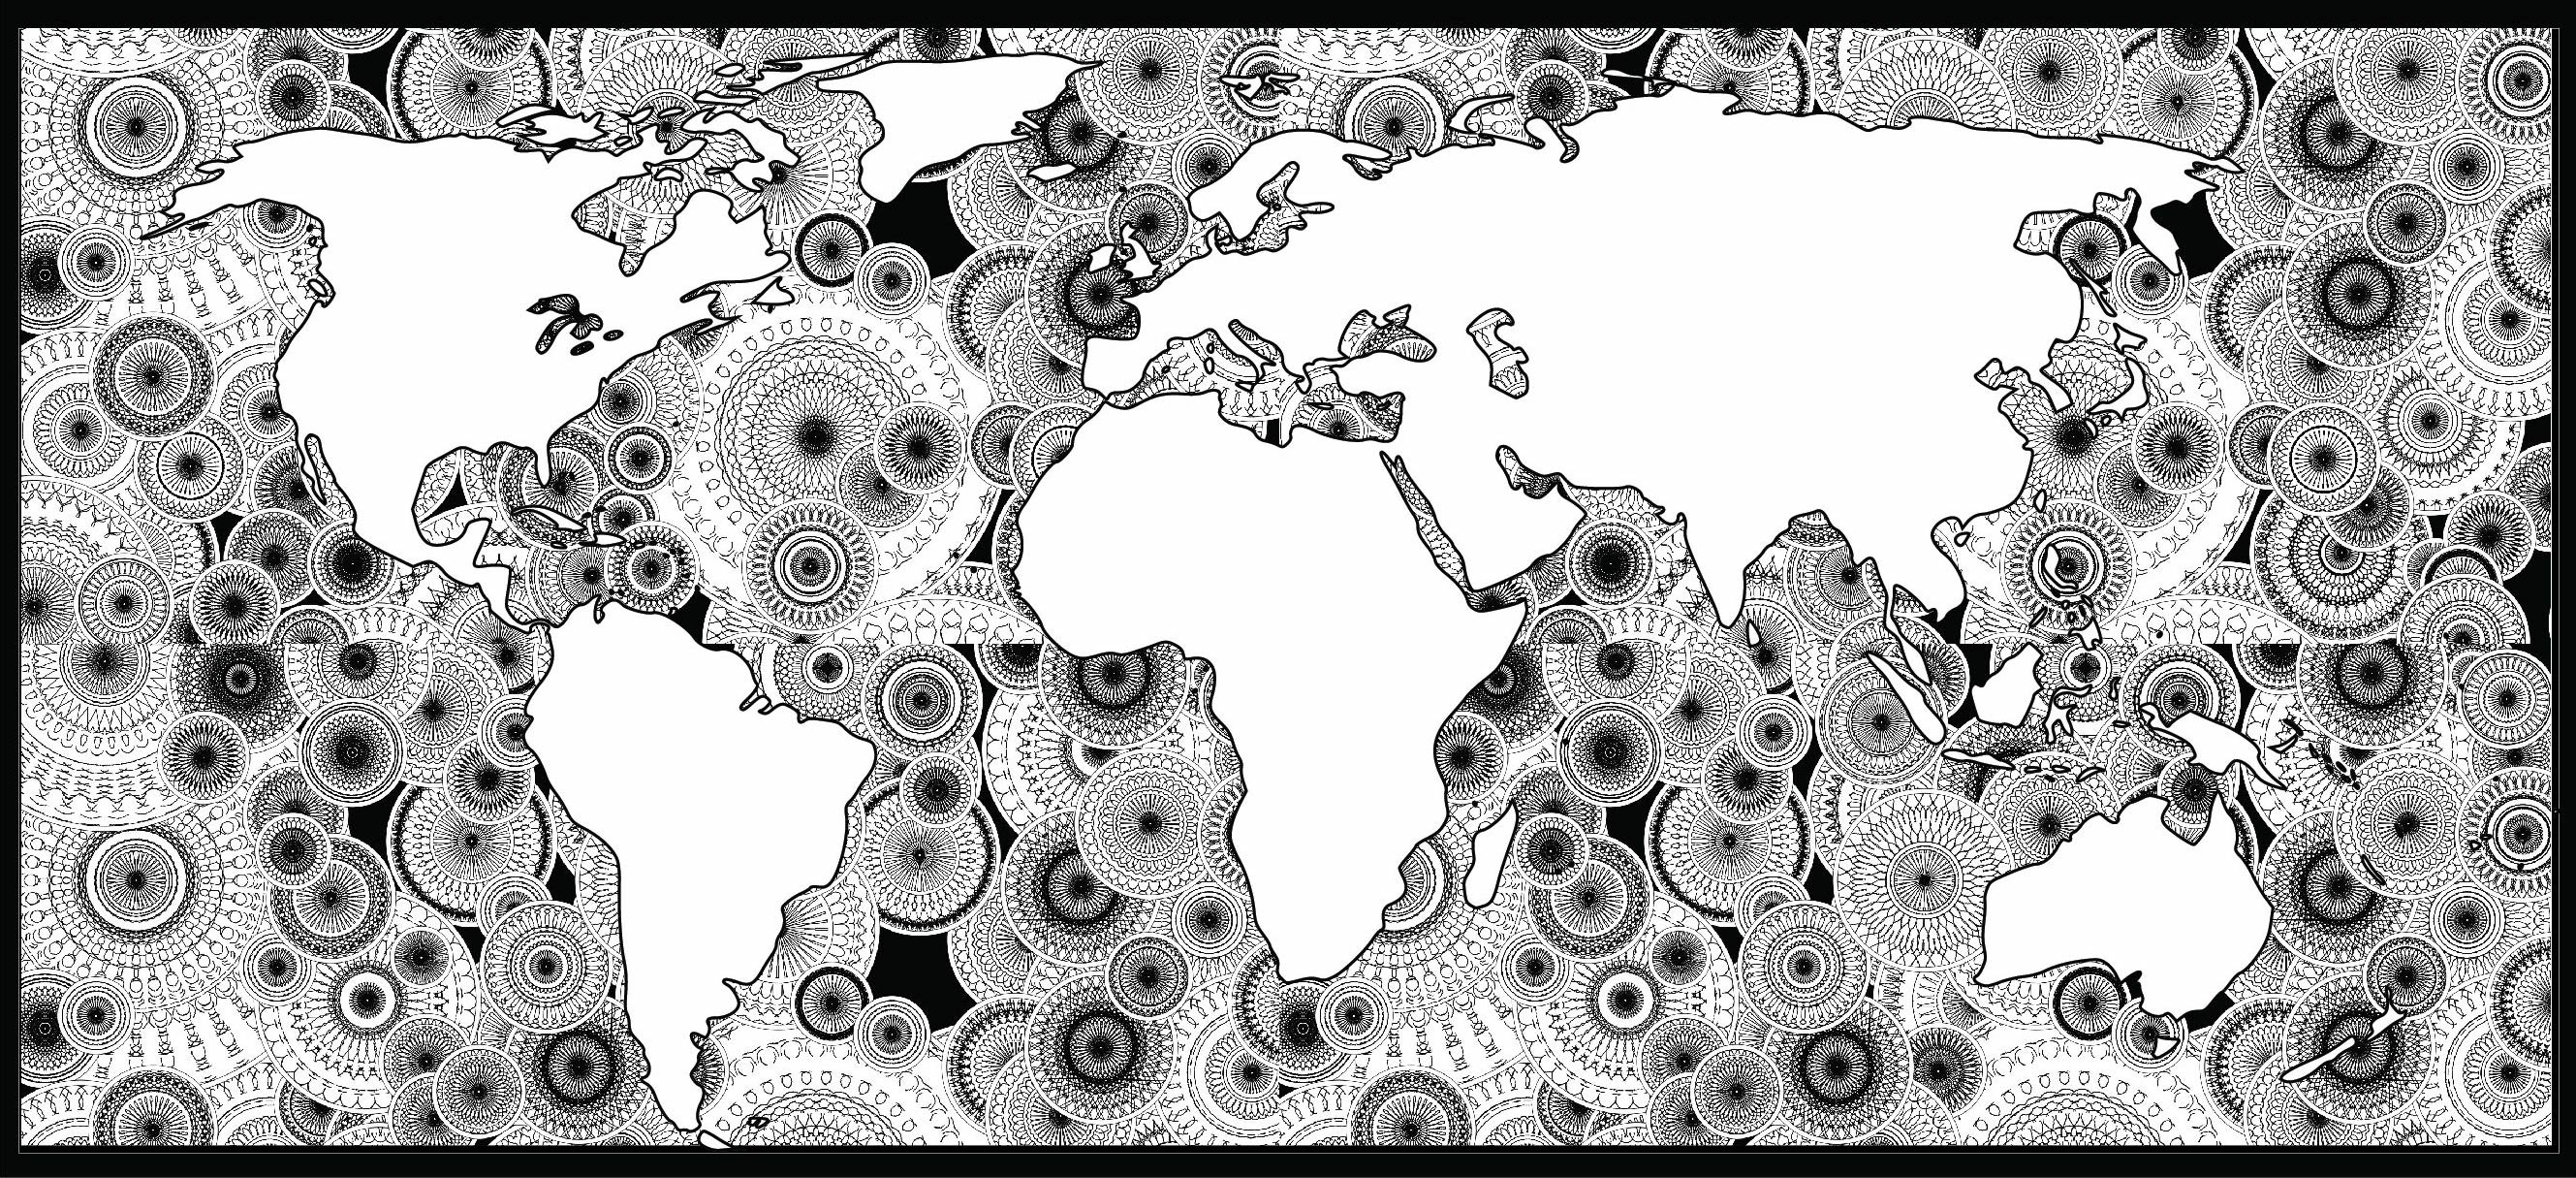 final world map drawing generate using machine learning